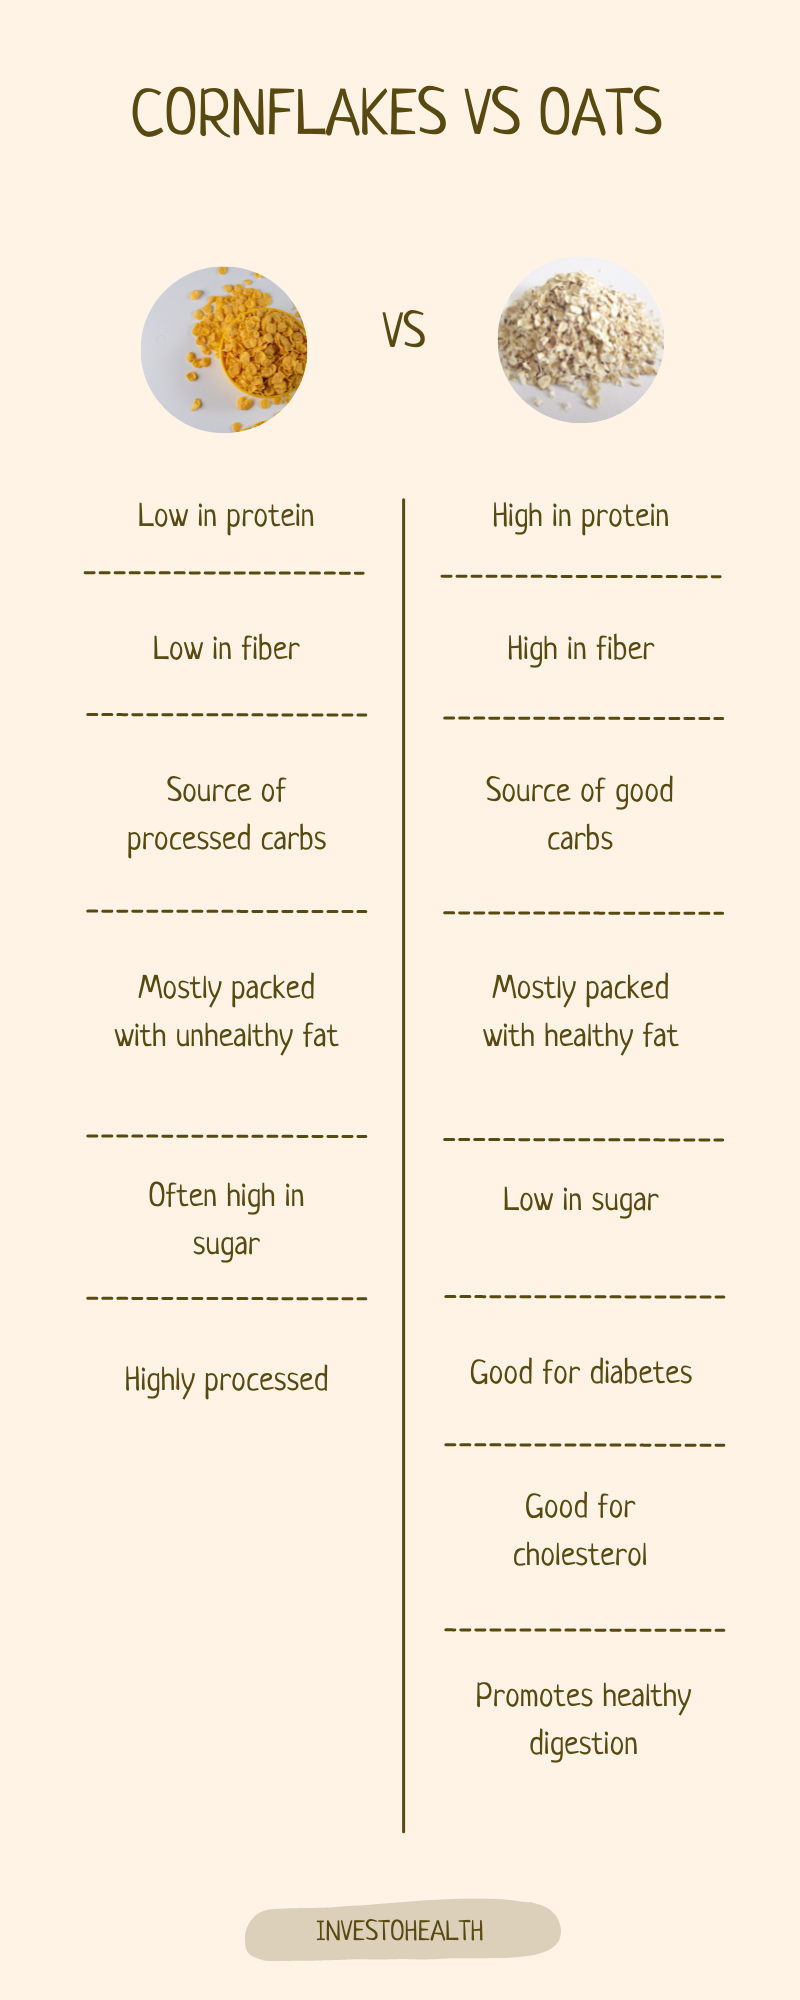 Cornflakes vs oats benefits comparison